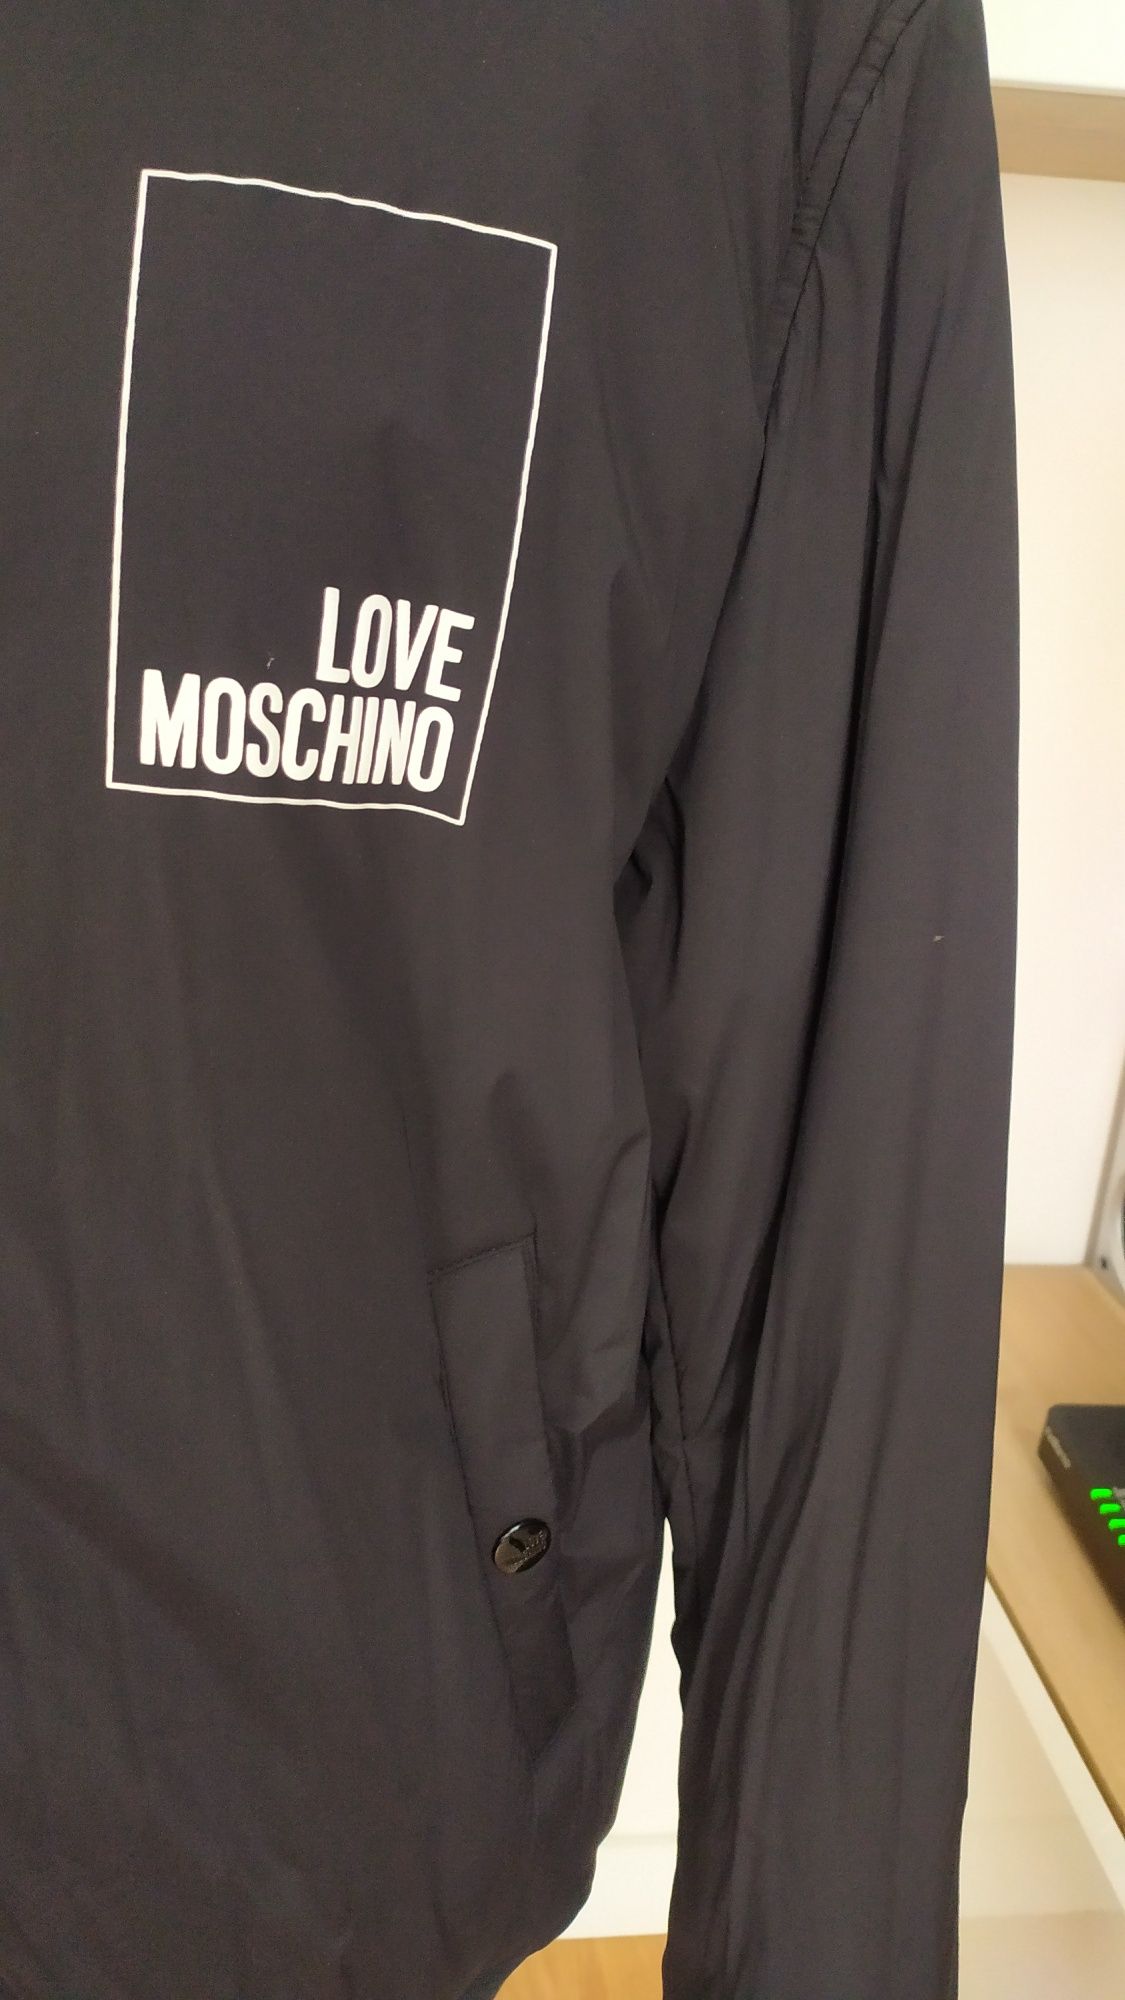 Love Moschino kurtka męska bomberka XL nowa